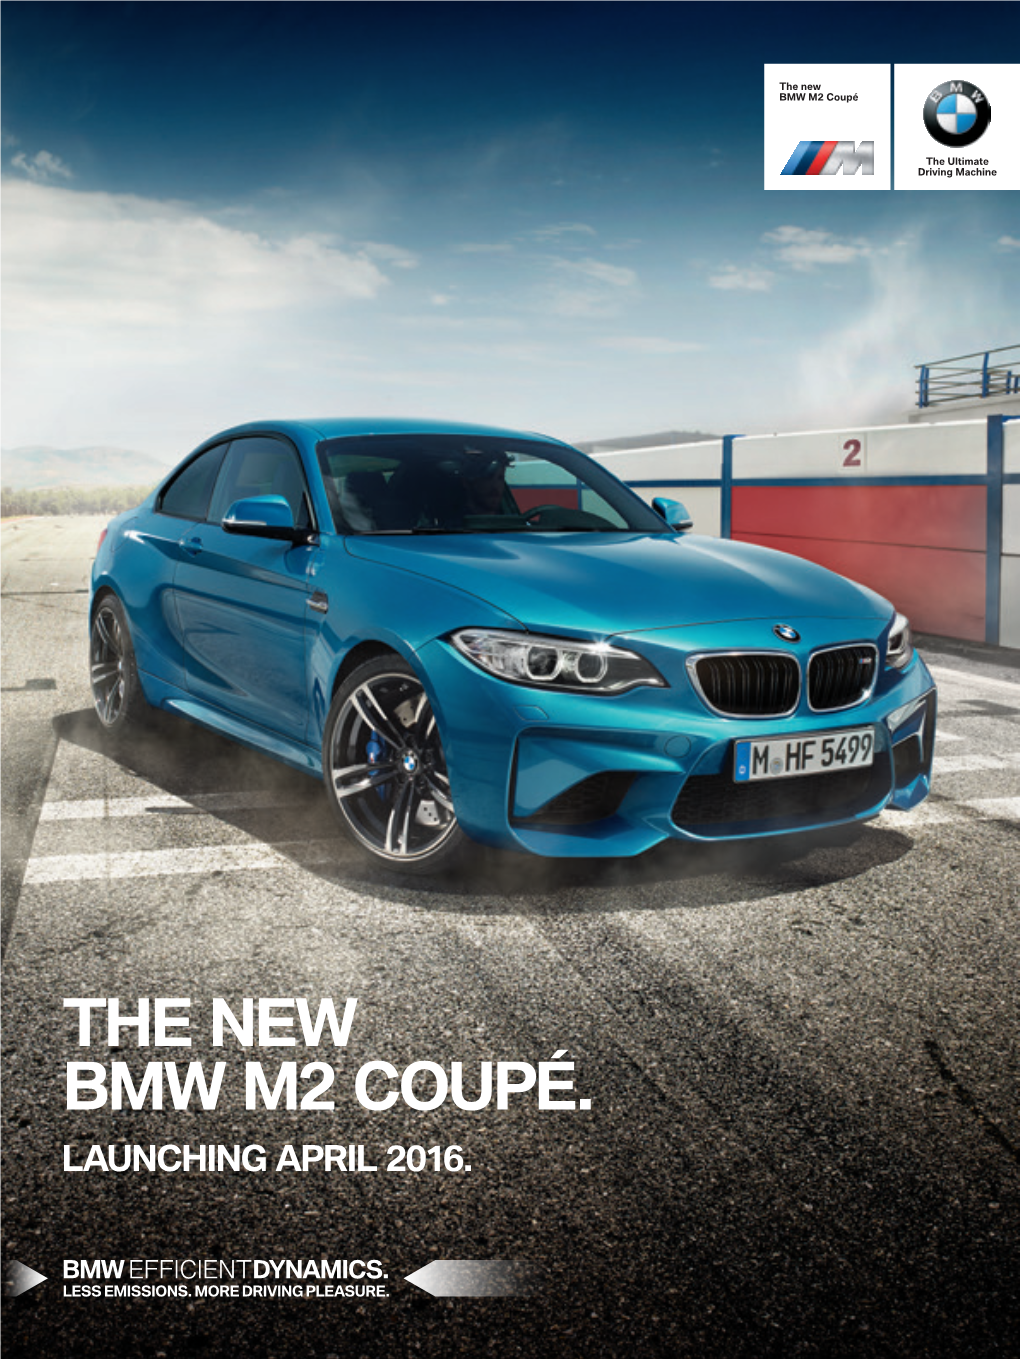 The New Bmw M2 Coupé. Launching April 2016